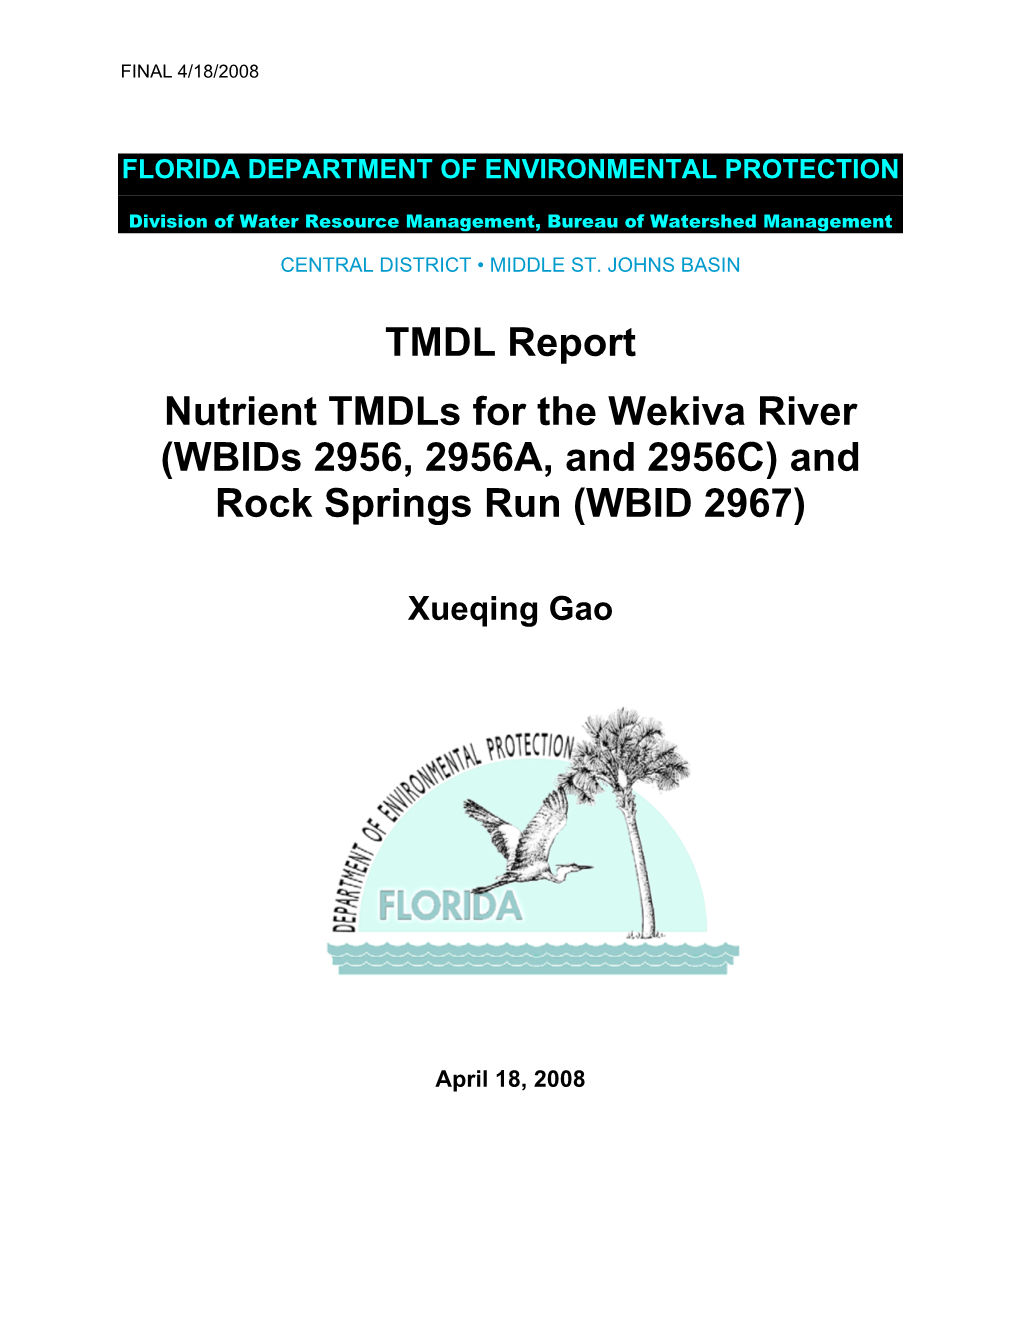 Nutrient Tmdls for Wekiva River & Rock Springs Run (Wbids 2956